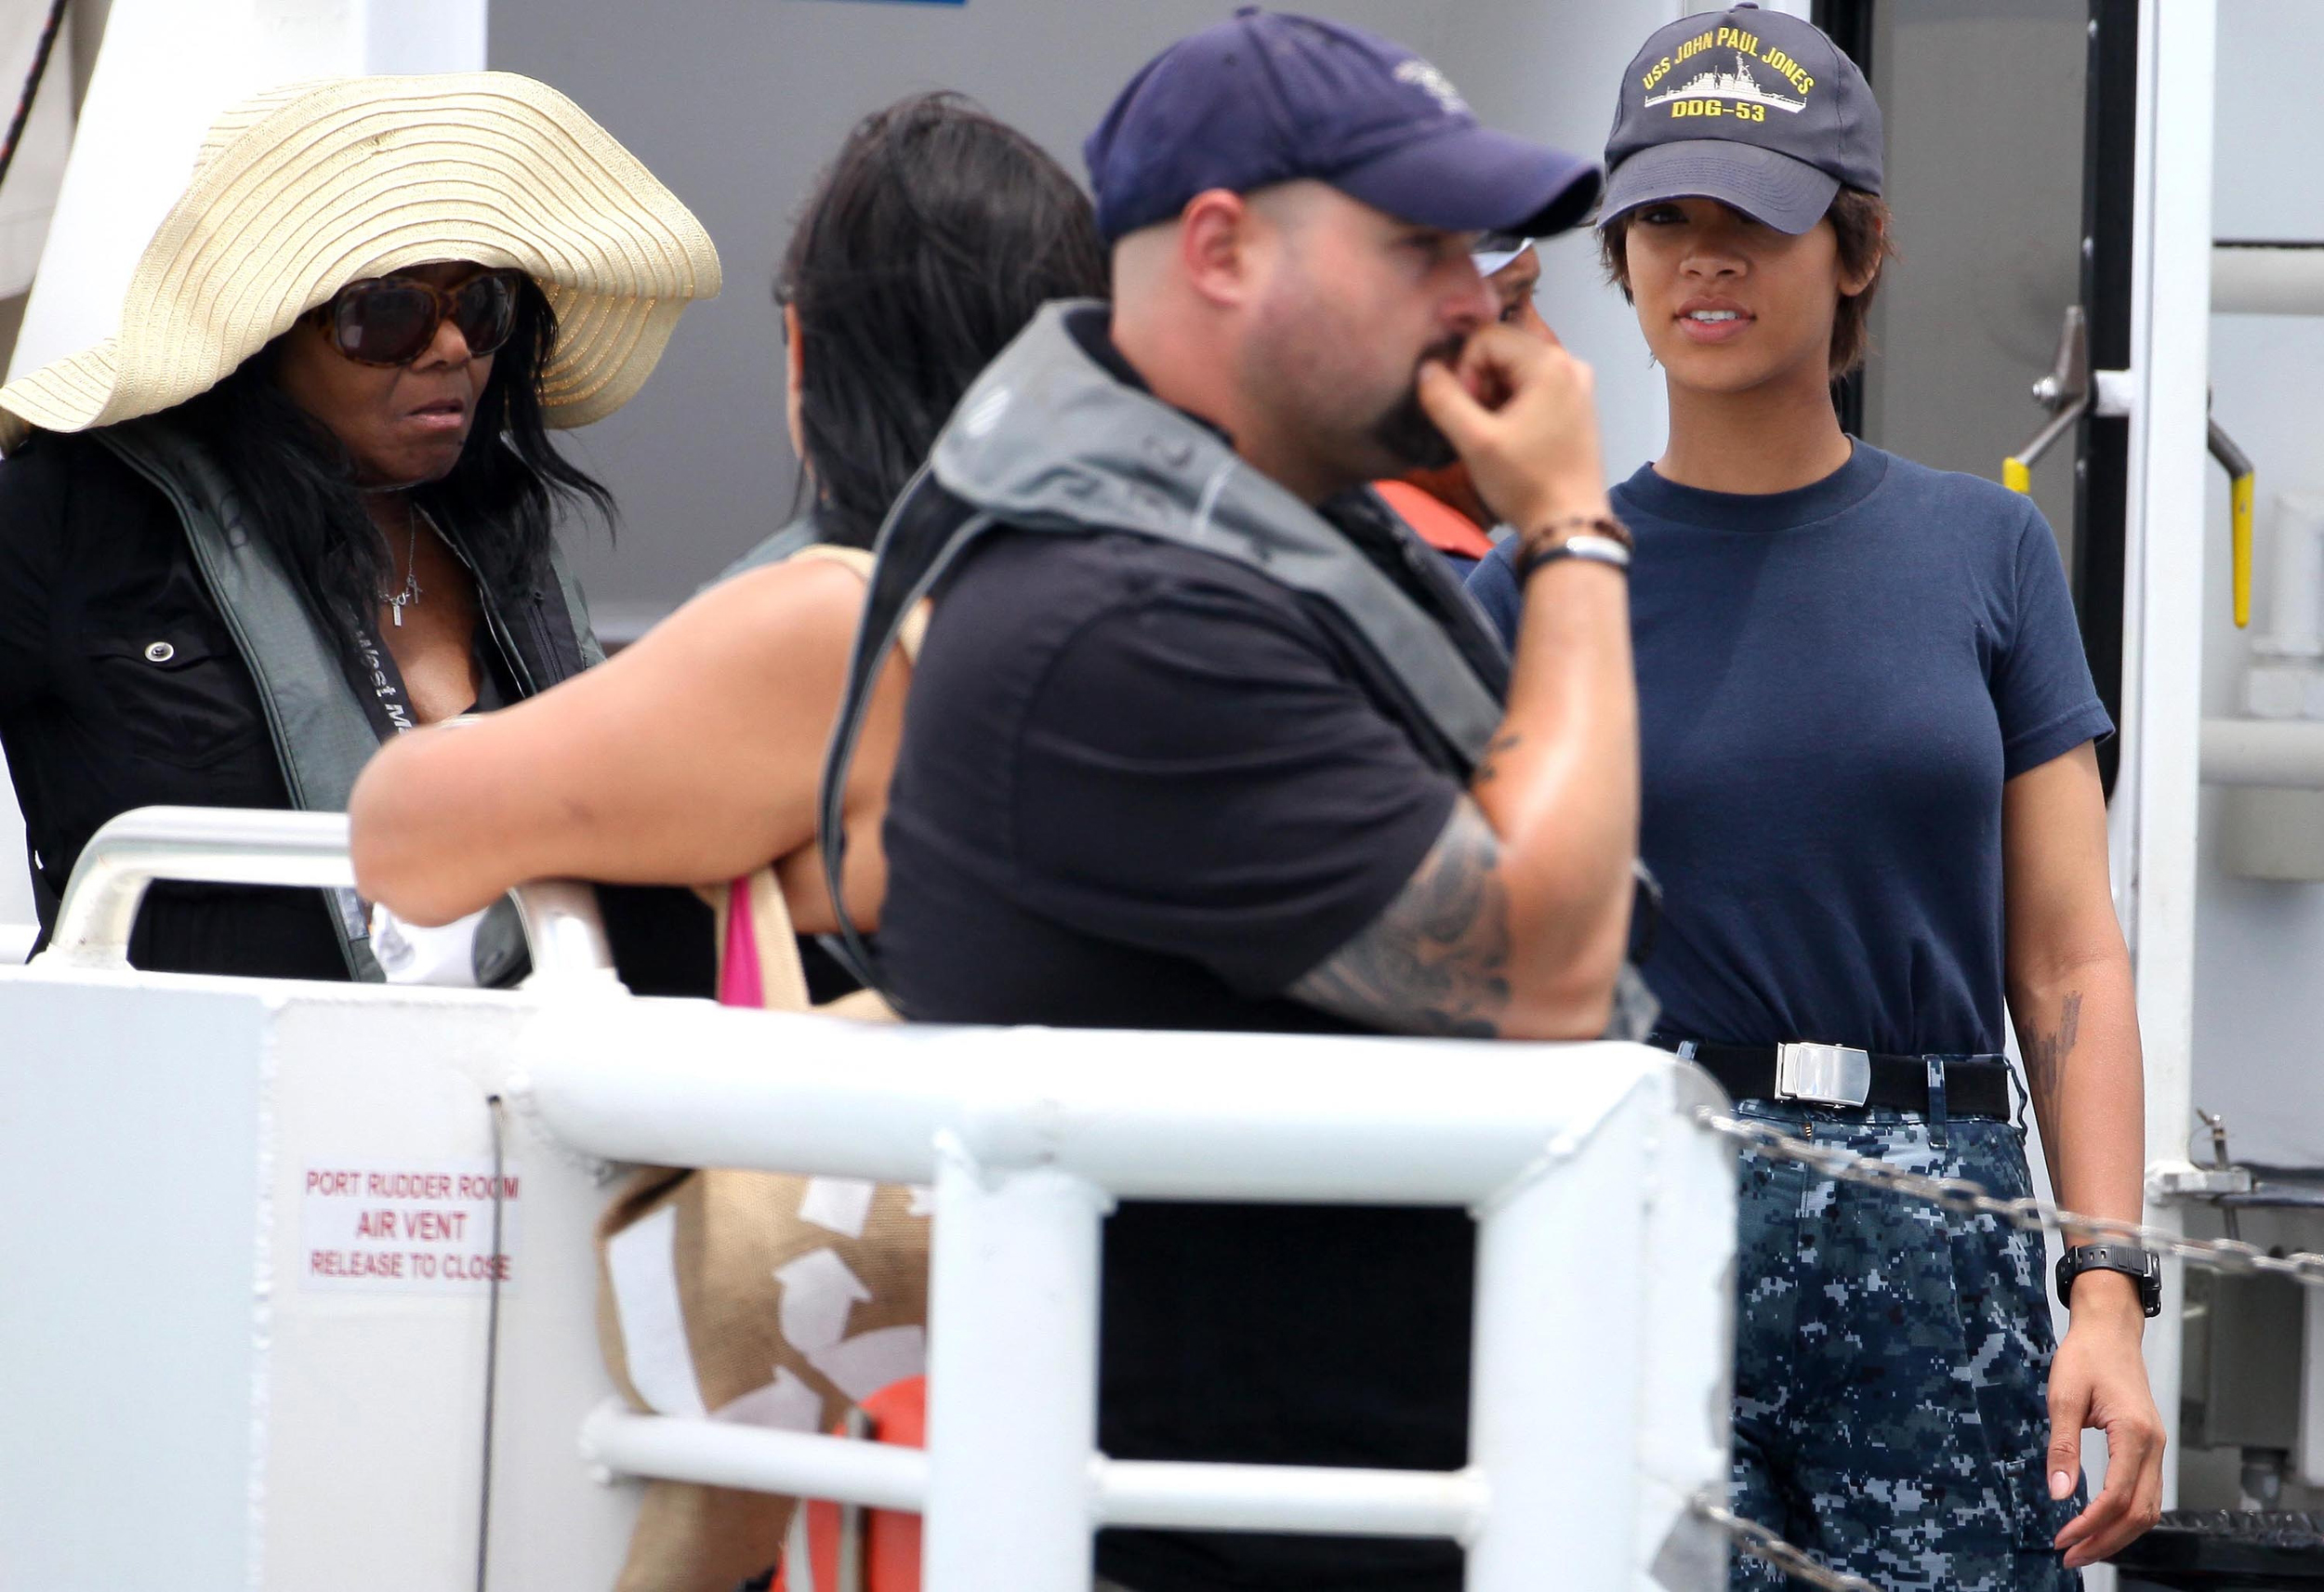 Rihannaonsetof Battleshipin Hawaii 2 9 2010 109